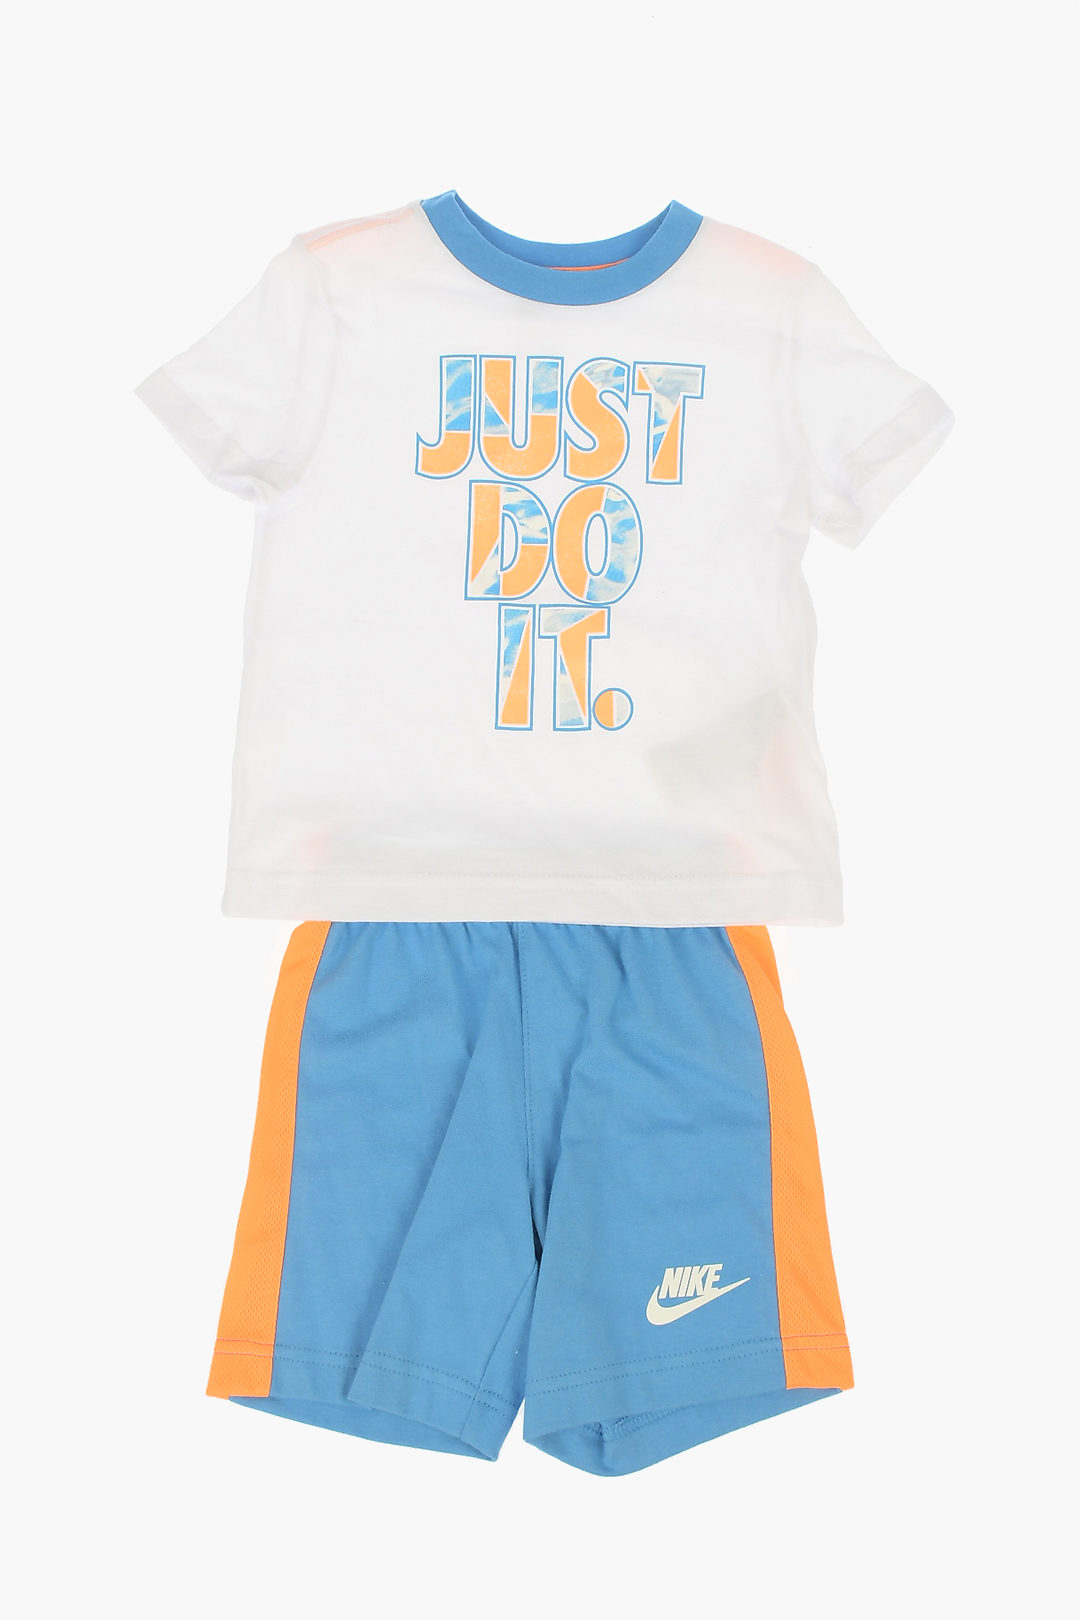 Nike KIDS T-shirt and Shorts Set girls - Glamood Outlet